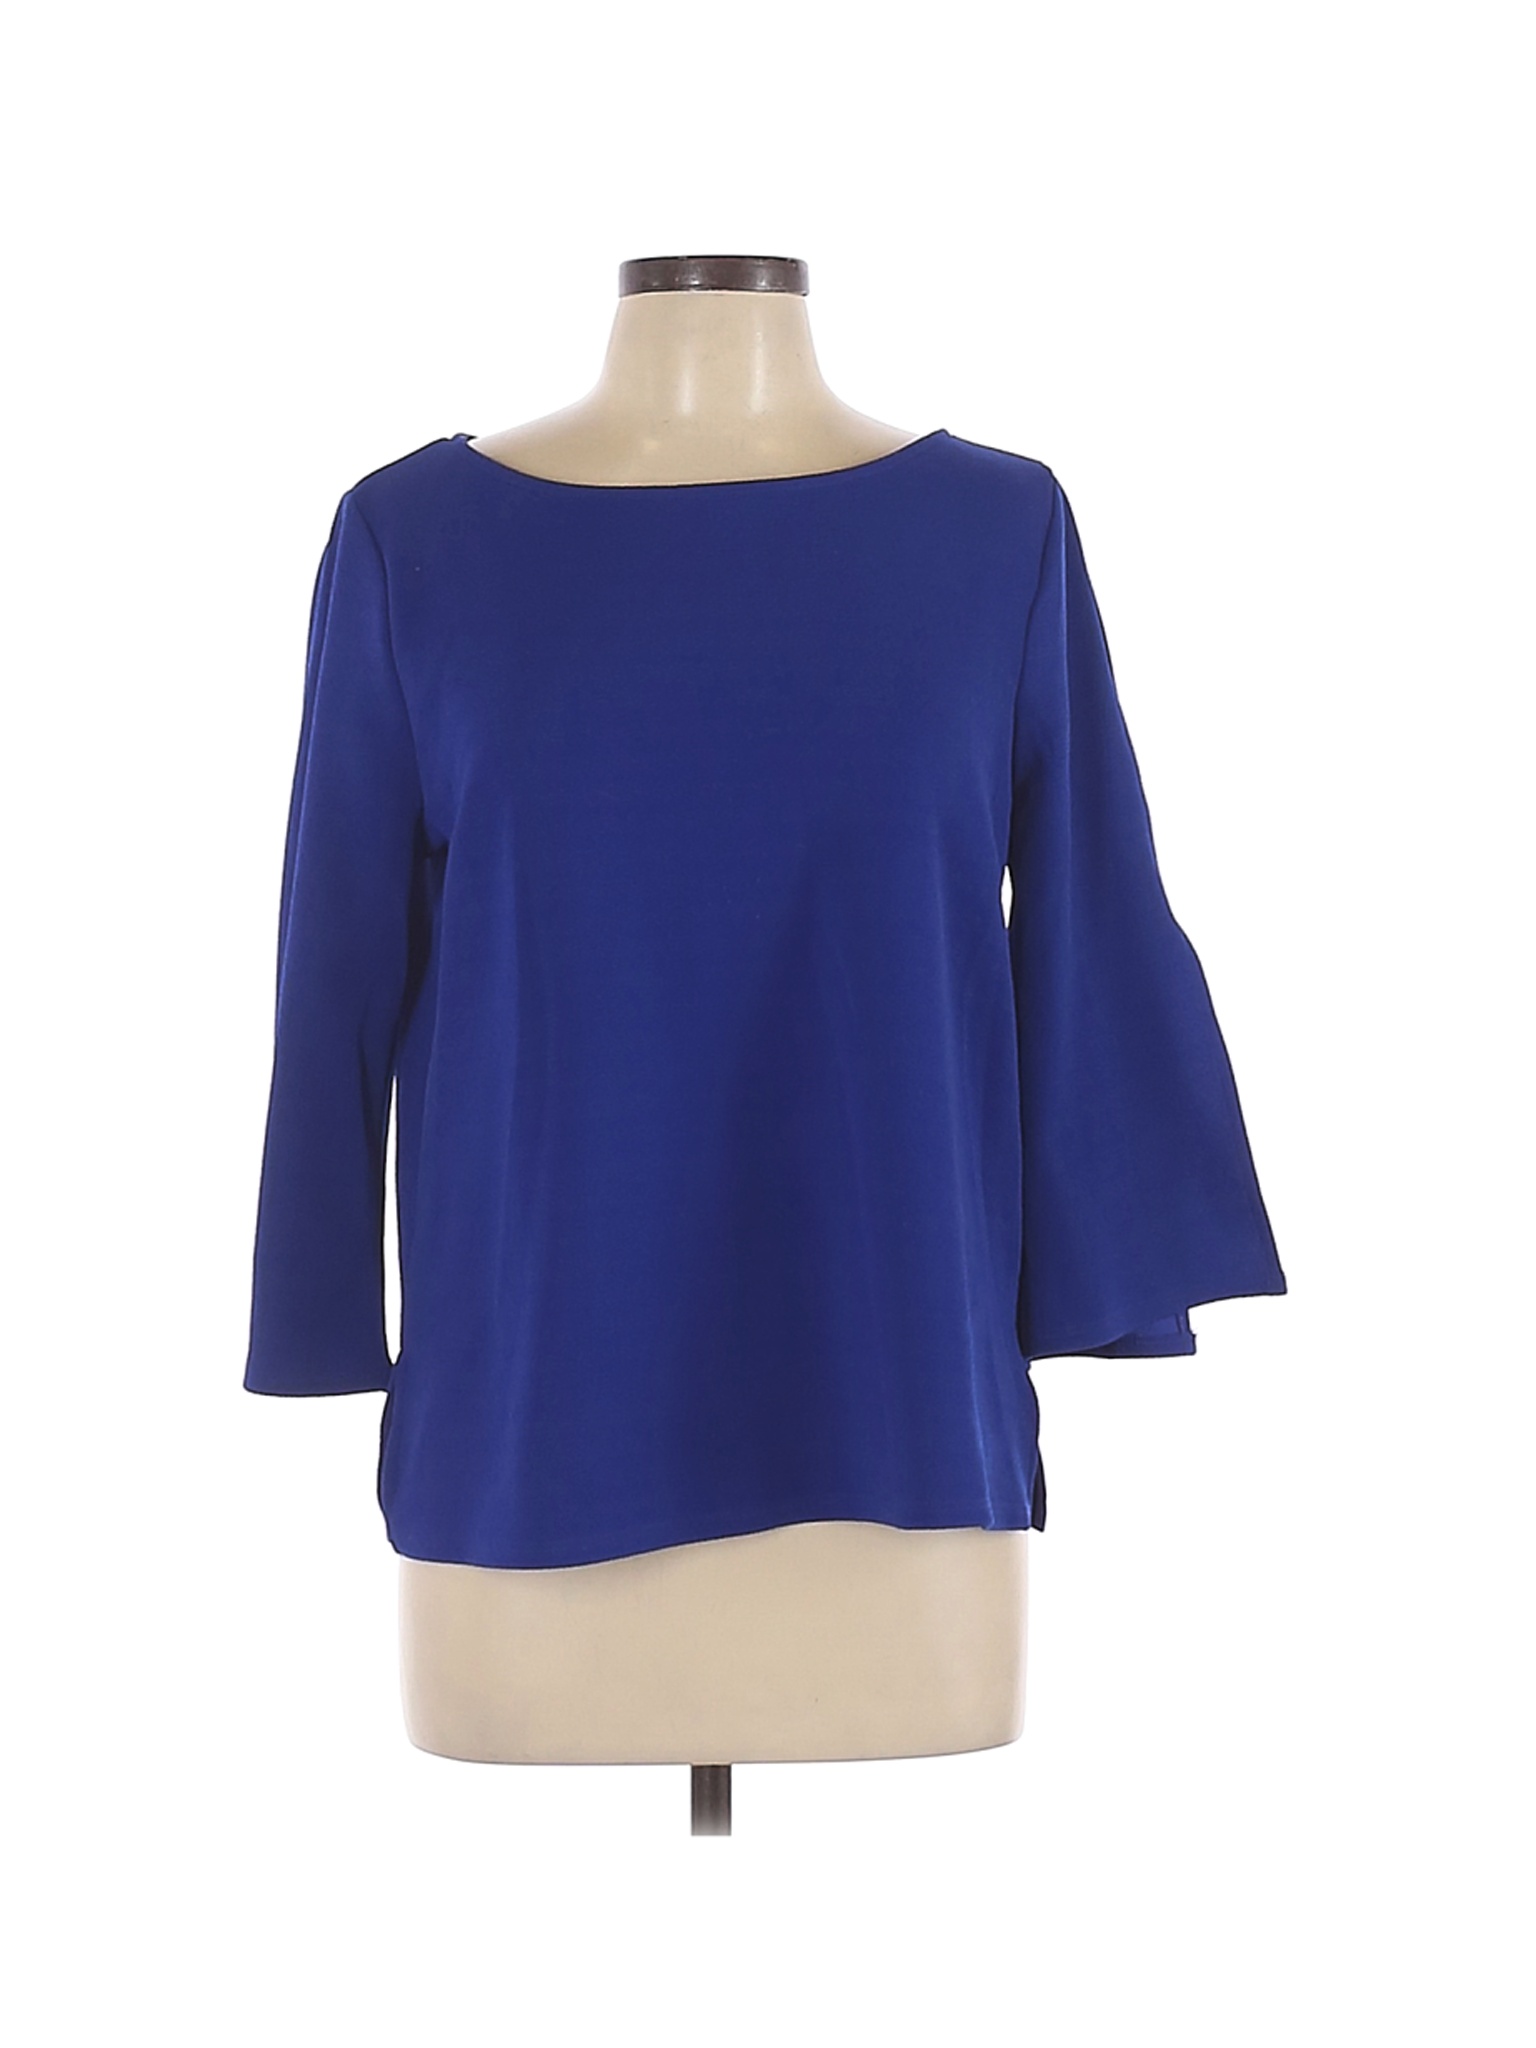 Green Envelope Women Blue Short Sleeve Top L | eBay